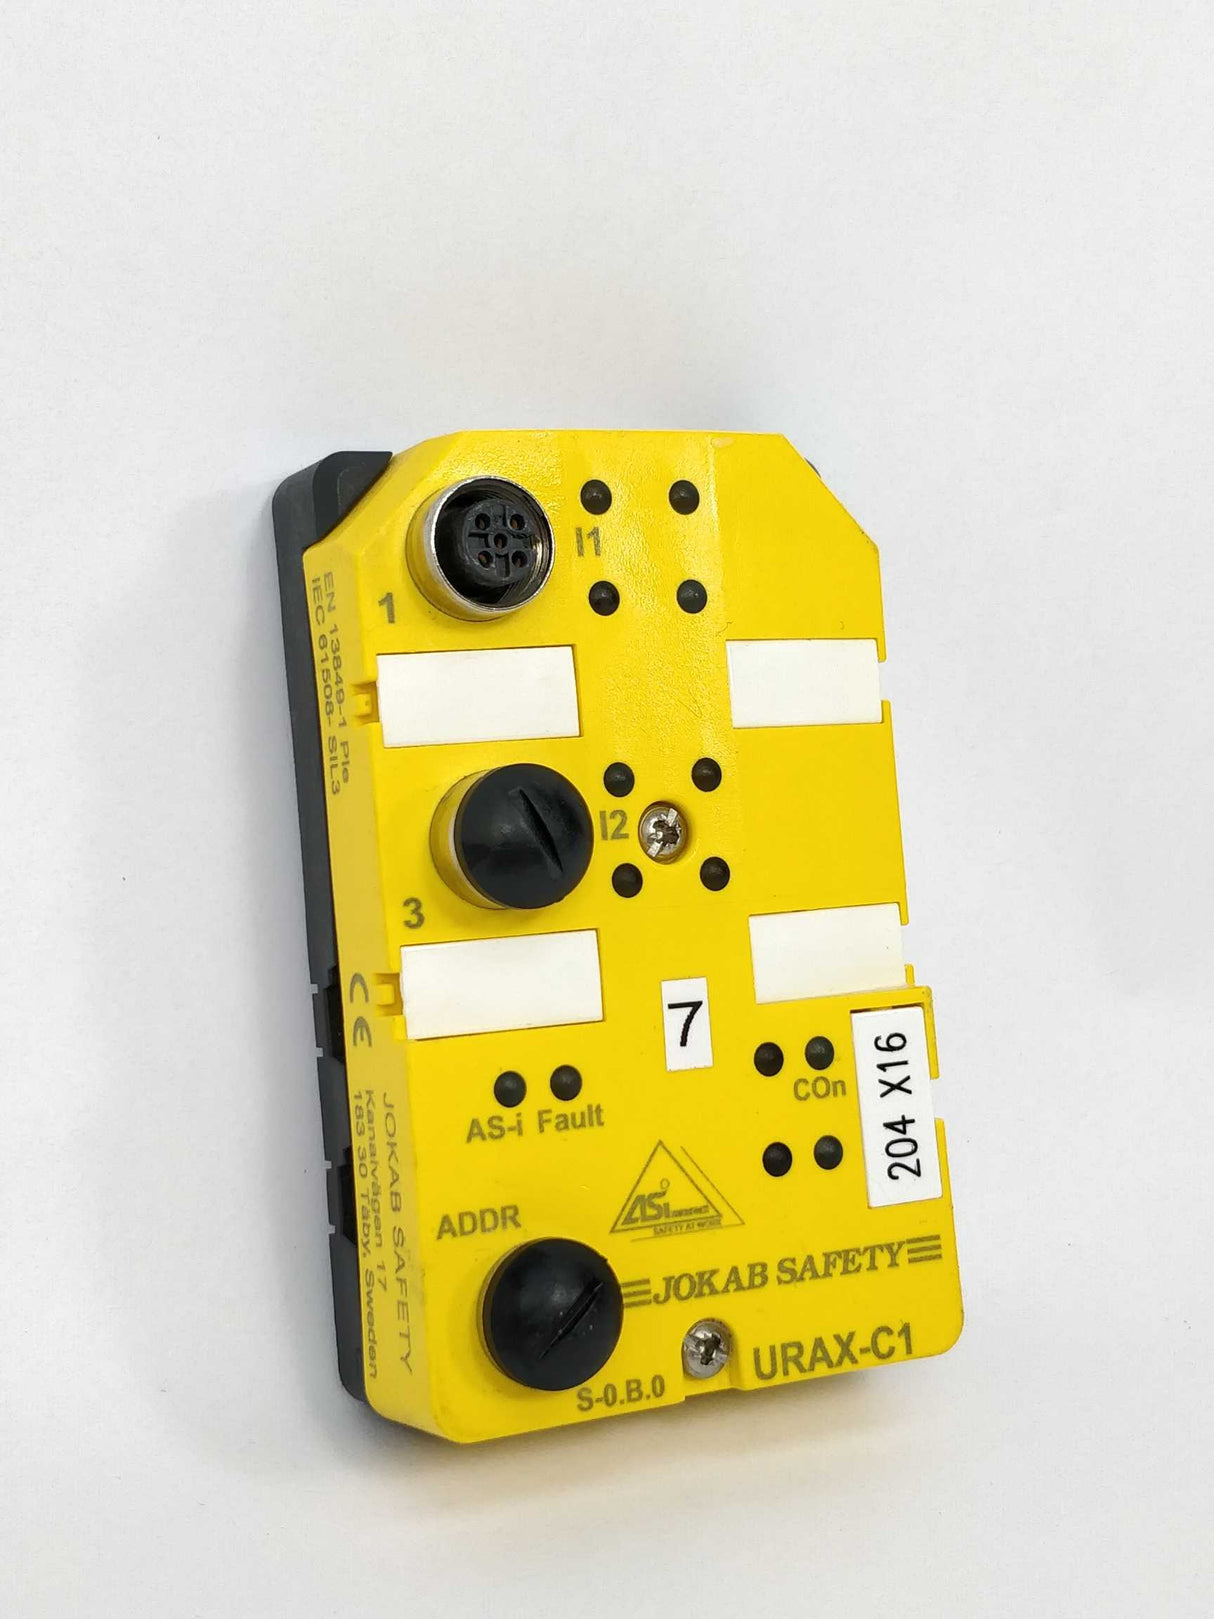 Jokab Safety URAX-C1 Safety Adapter